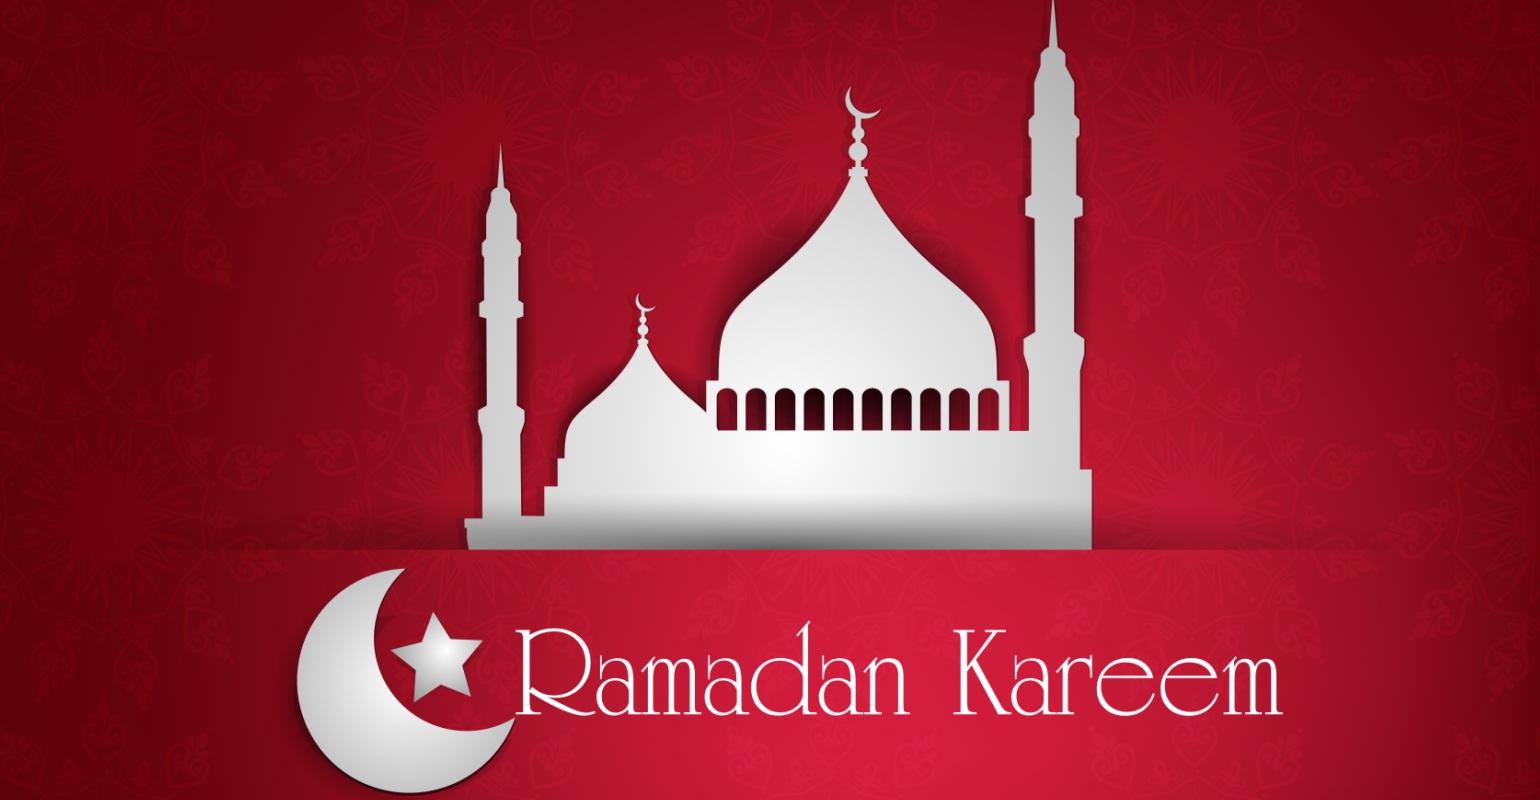 Happy Ramadan {Ramzan} 2016 Images Whatsapp DP | Eid Mubarak HD Wallpapers  GIFs For Facebook Free Download